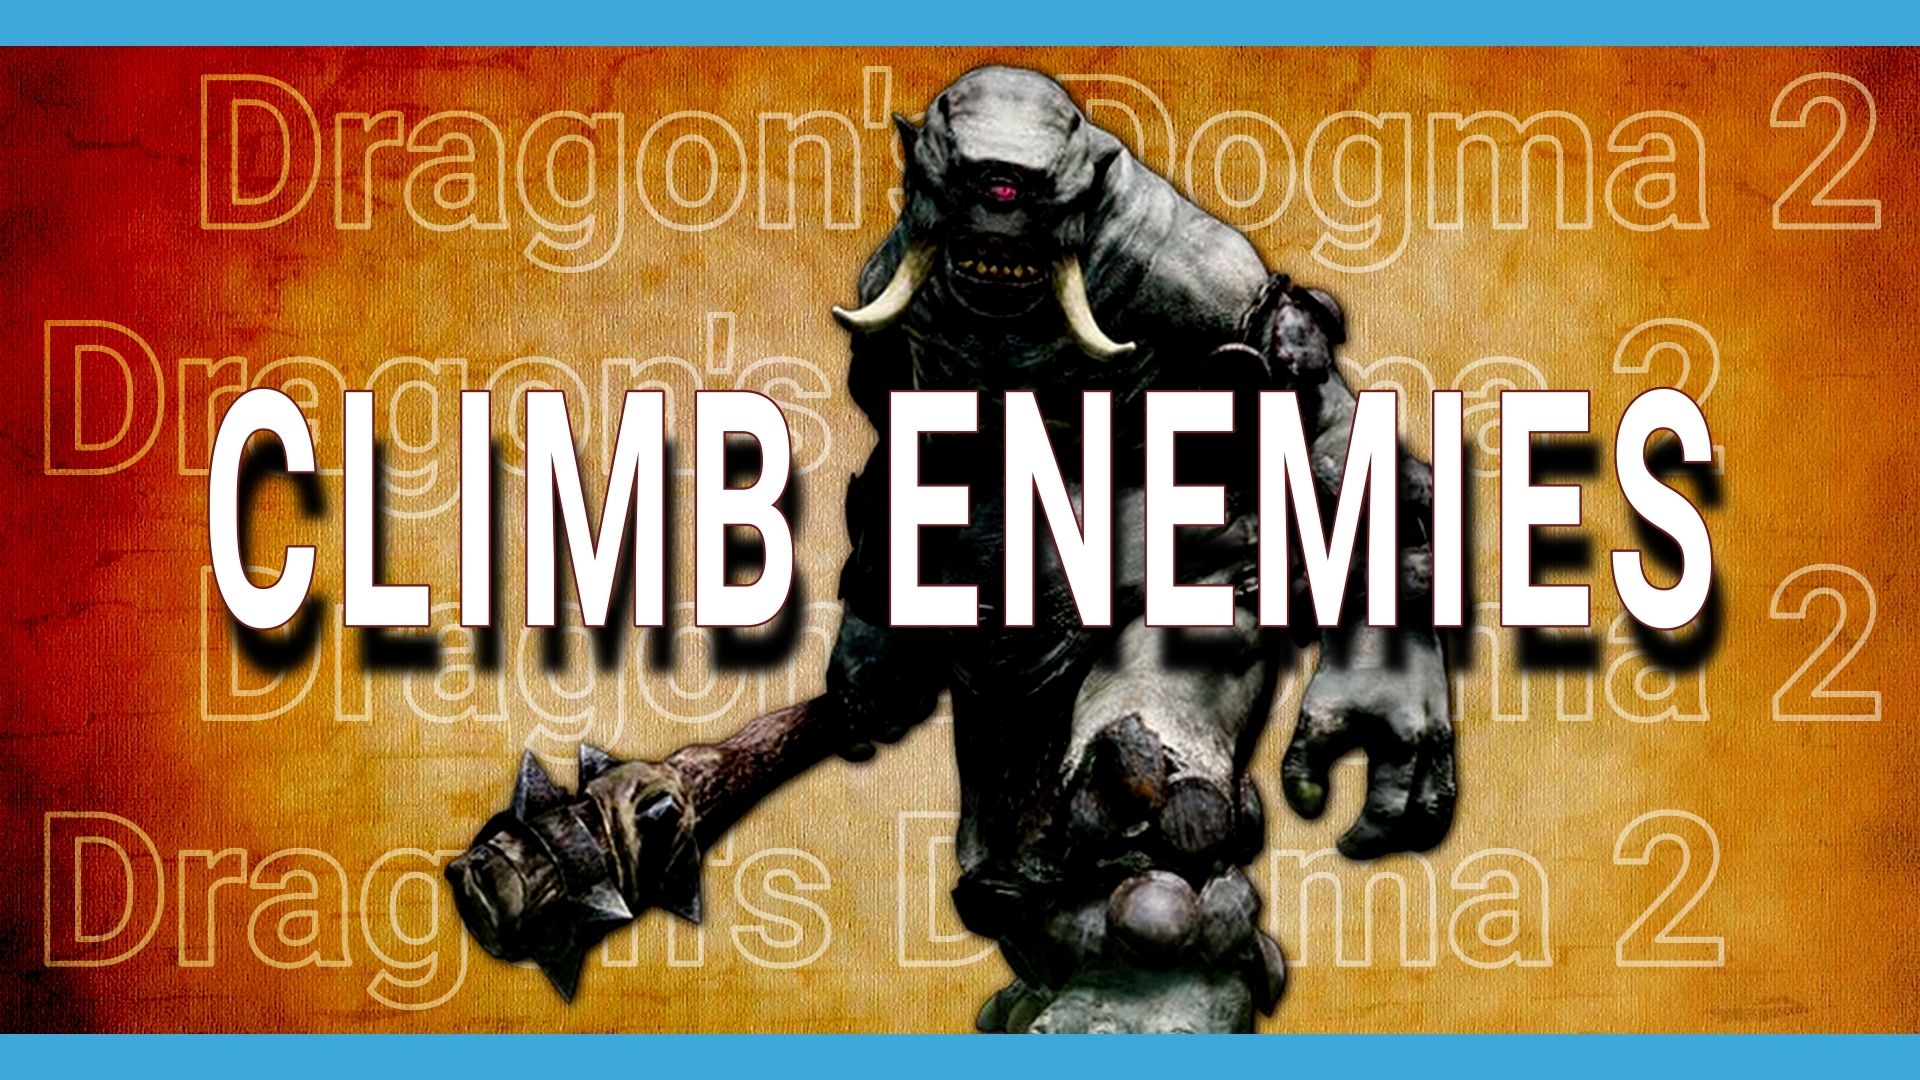 Dragon's Dogma 2 climb enemies video thumbnail